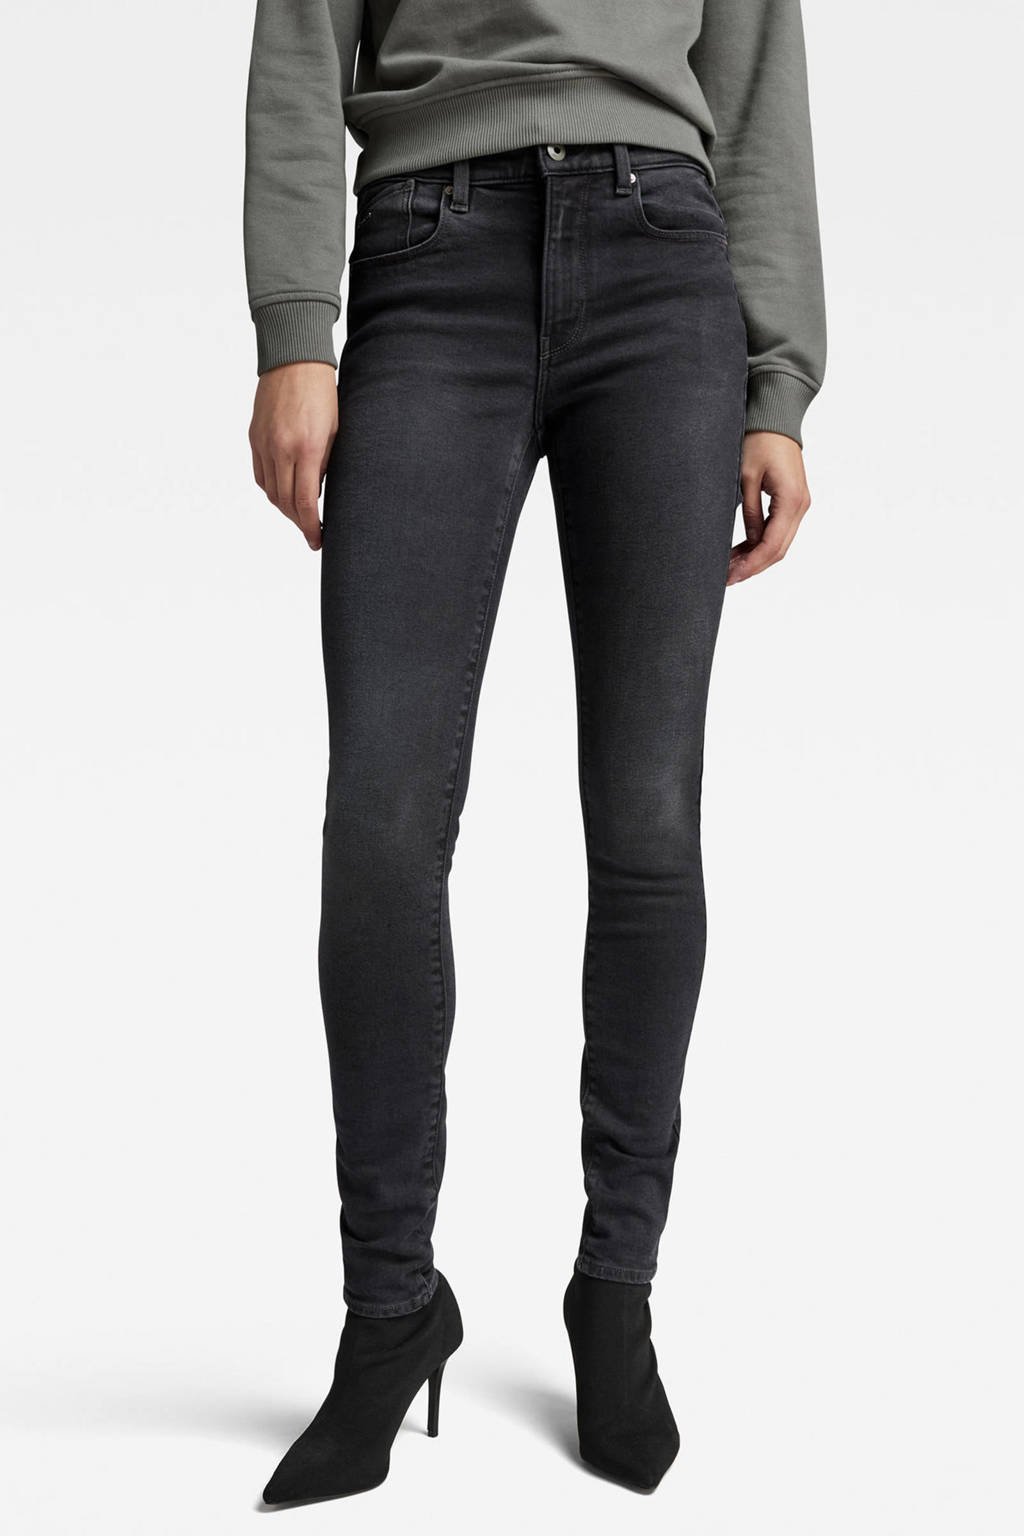 wehkamp | in RAW worn onyx Lhana G-Star jeans skinny black